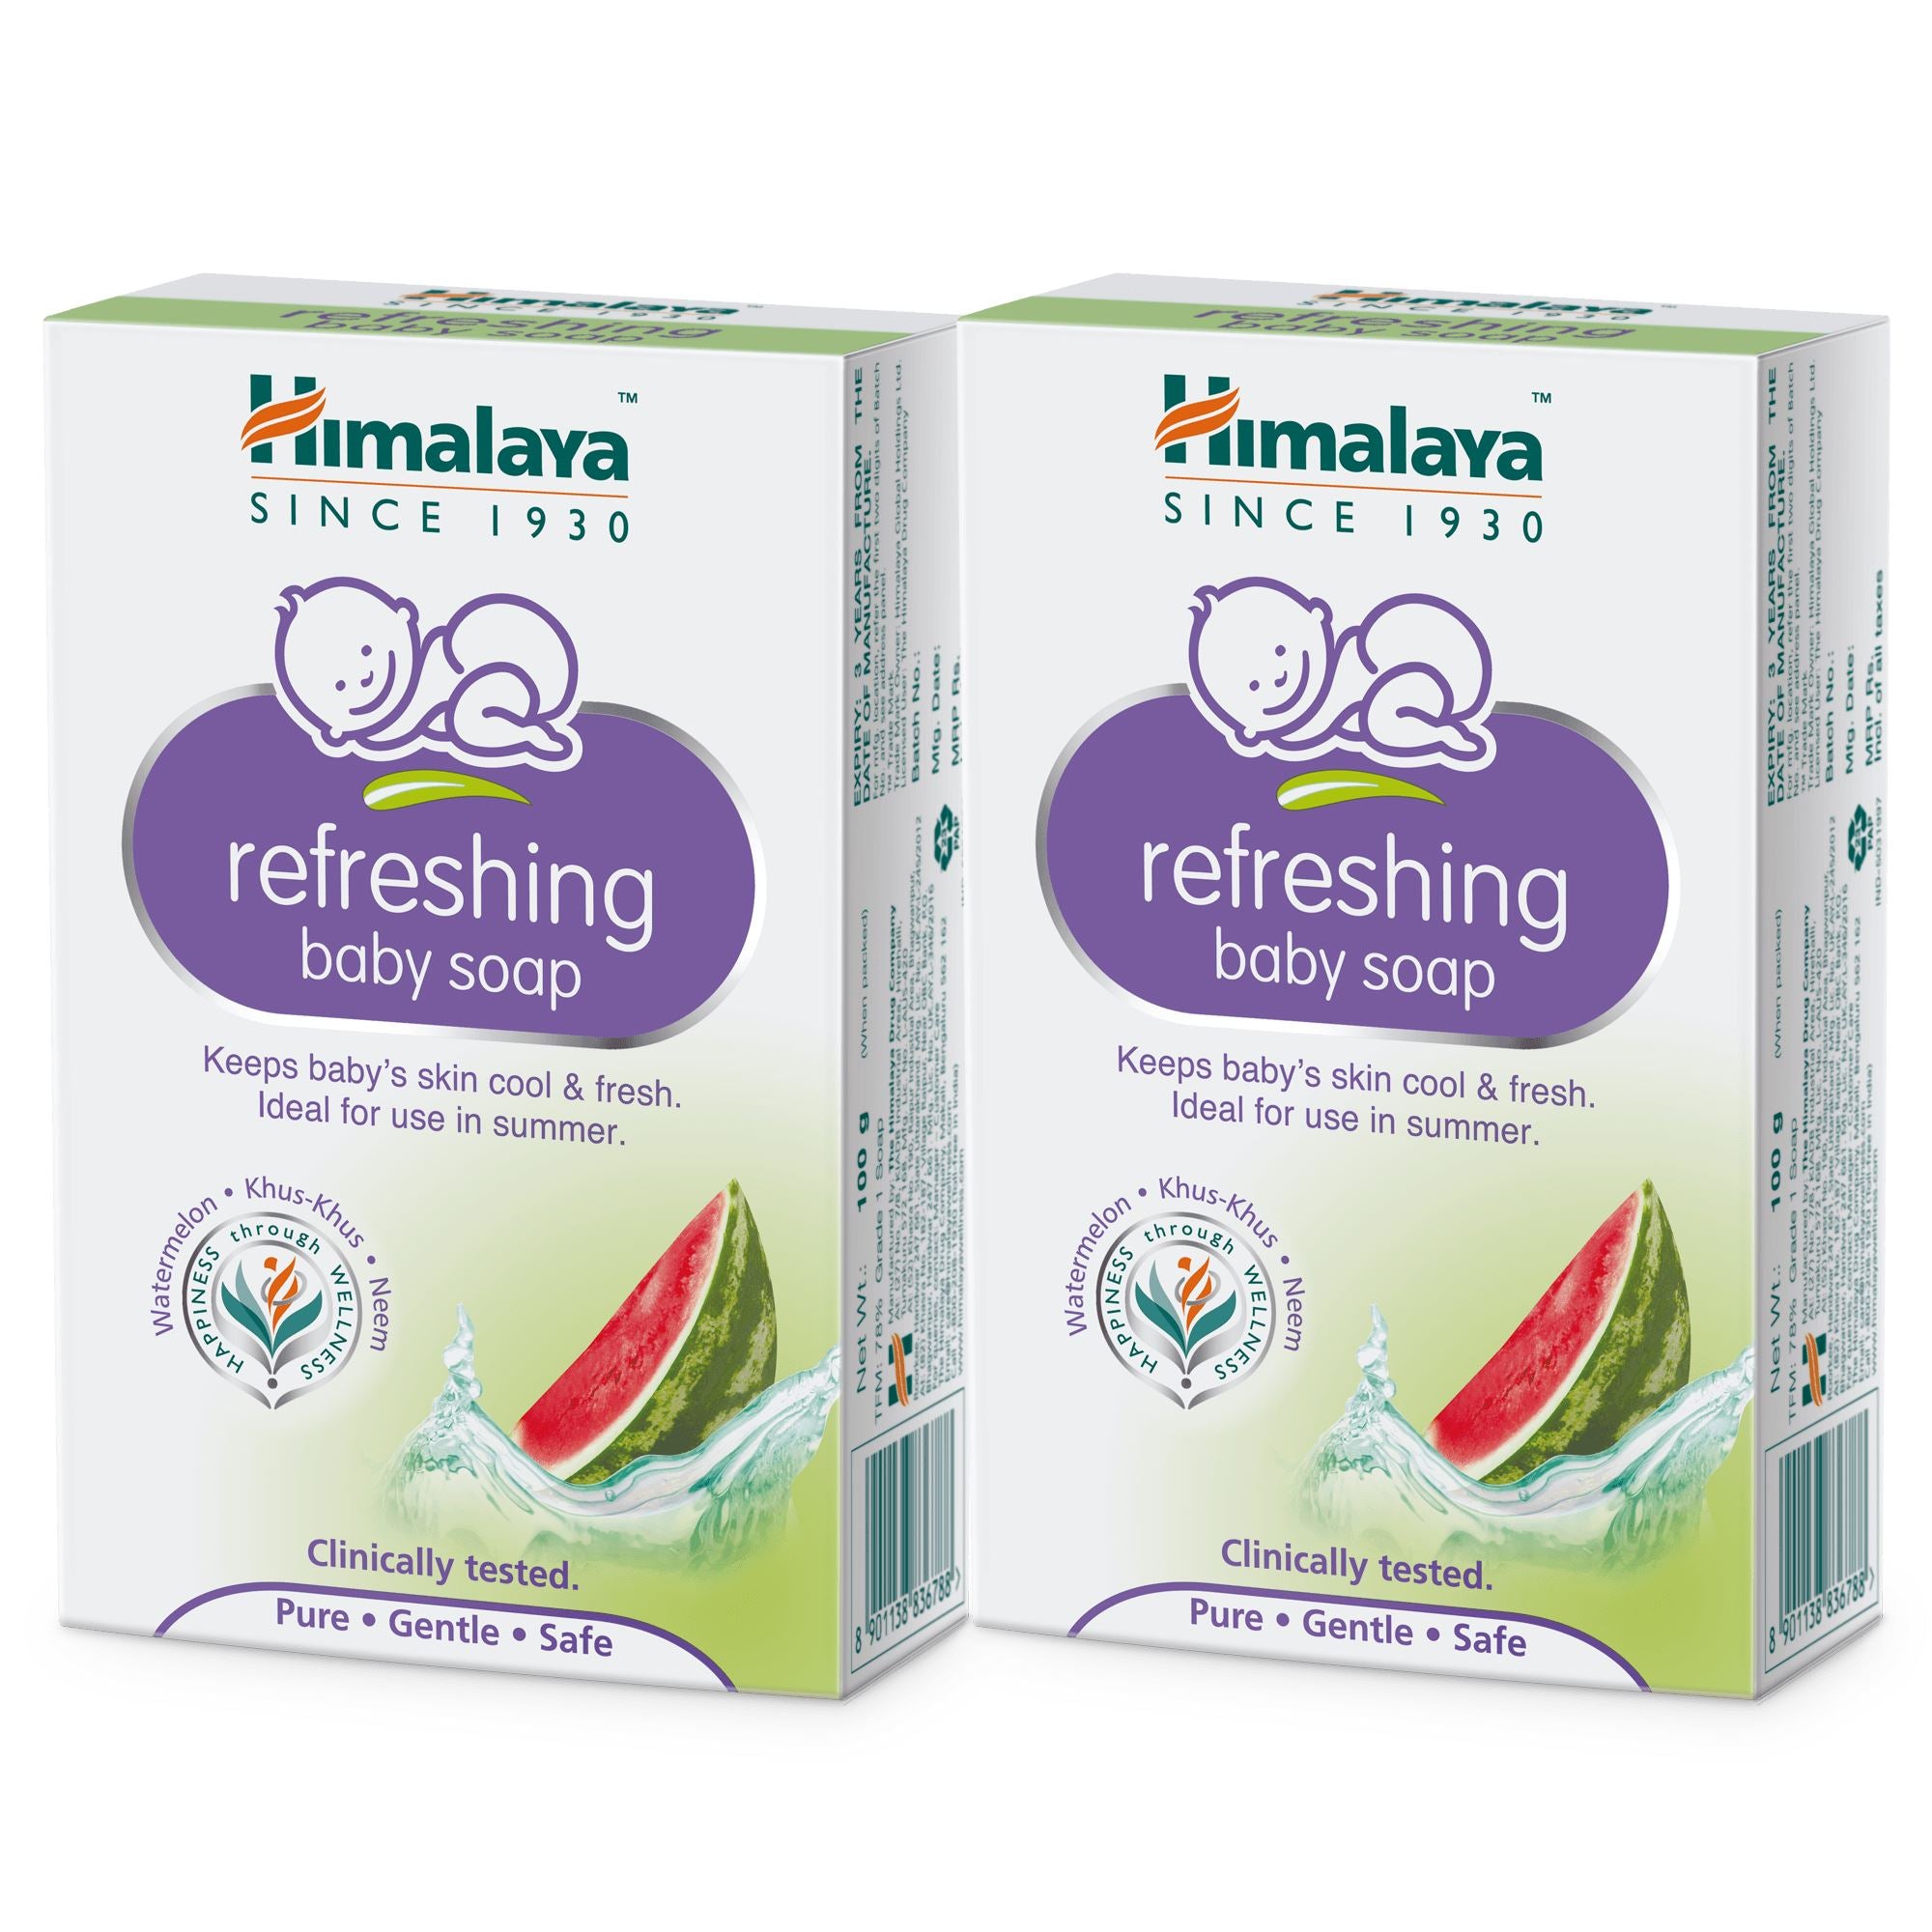 Himalaya refreshing baby soap 100gx2 - Keeps baby's skin cool and fresh